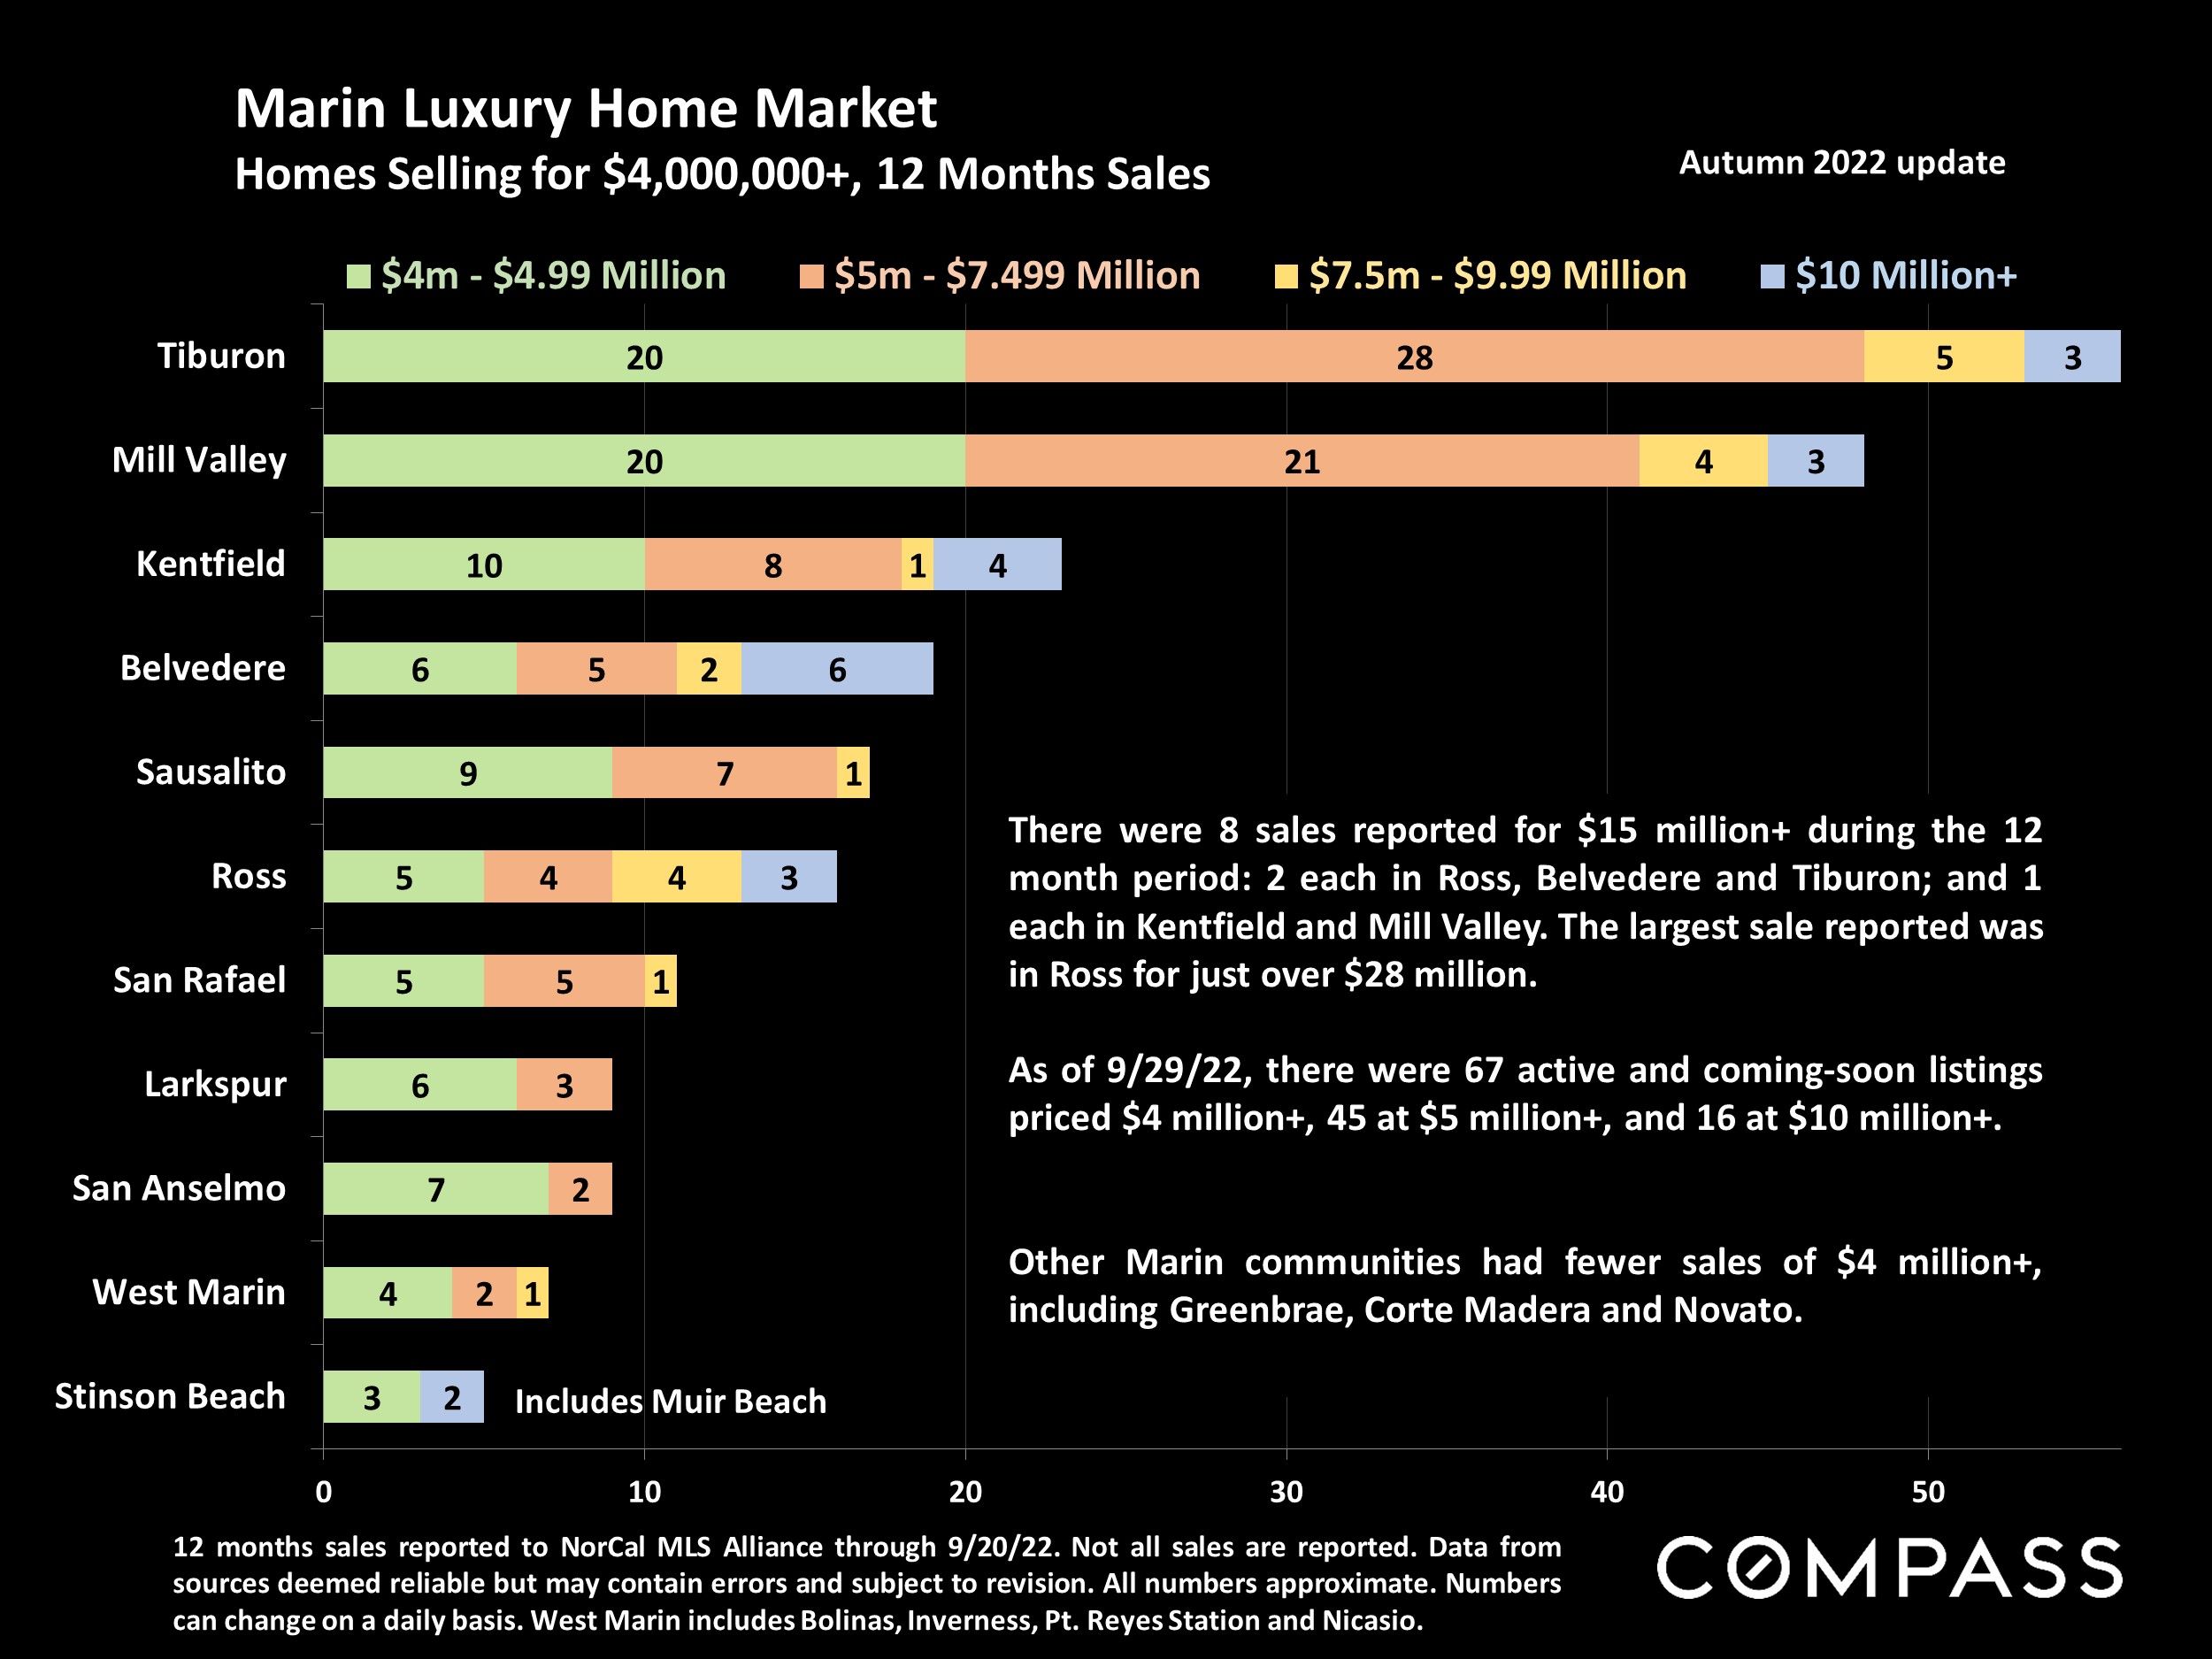 Marin Luxury Home Market